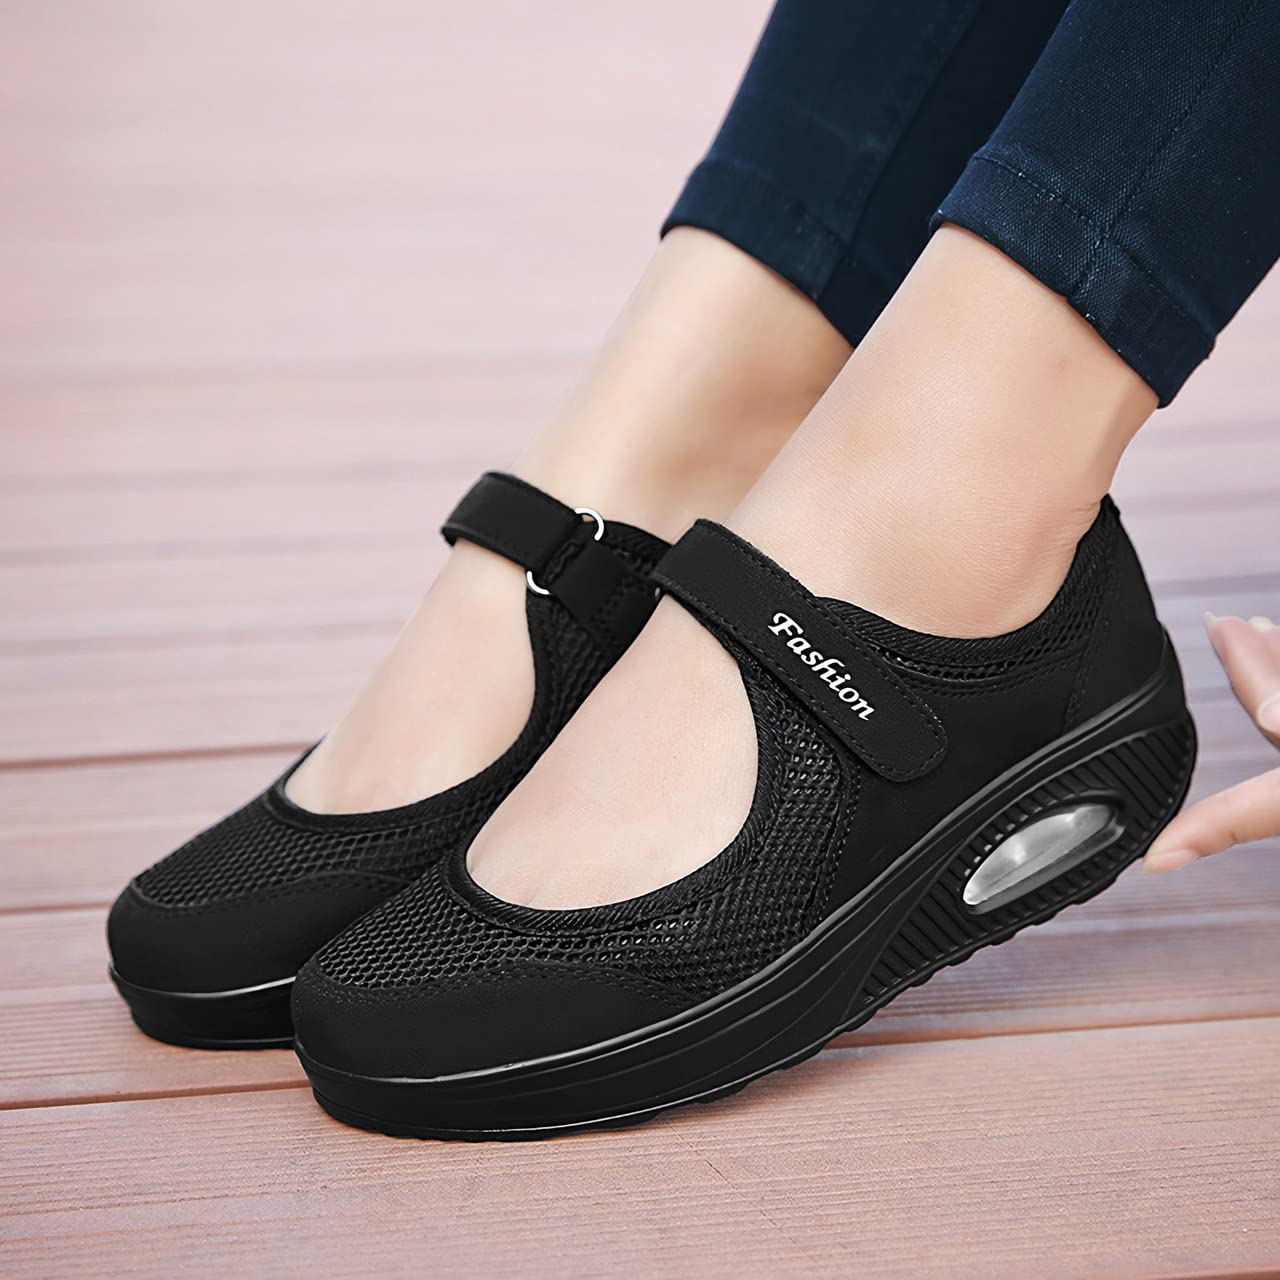 L LOUBIT Women's Platform Walking Shoes Breathable Mesh Sneakers Comfort Working Nursing Shoes Lightweight Wedge Loafers Black 40